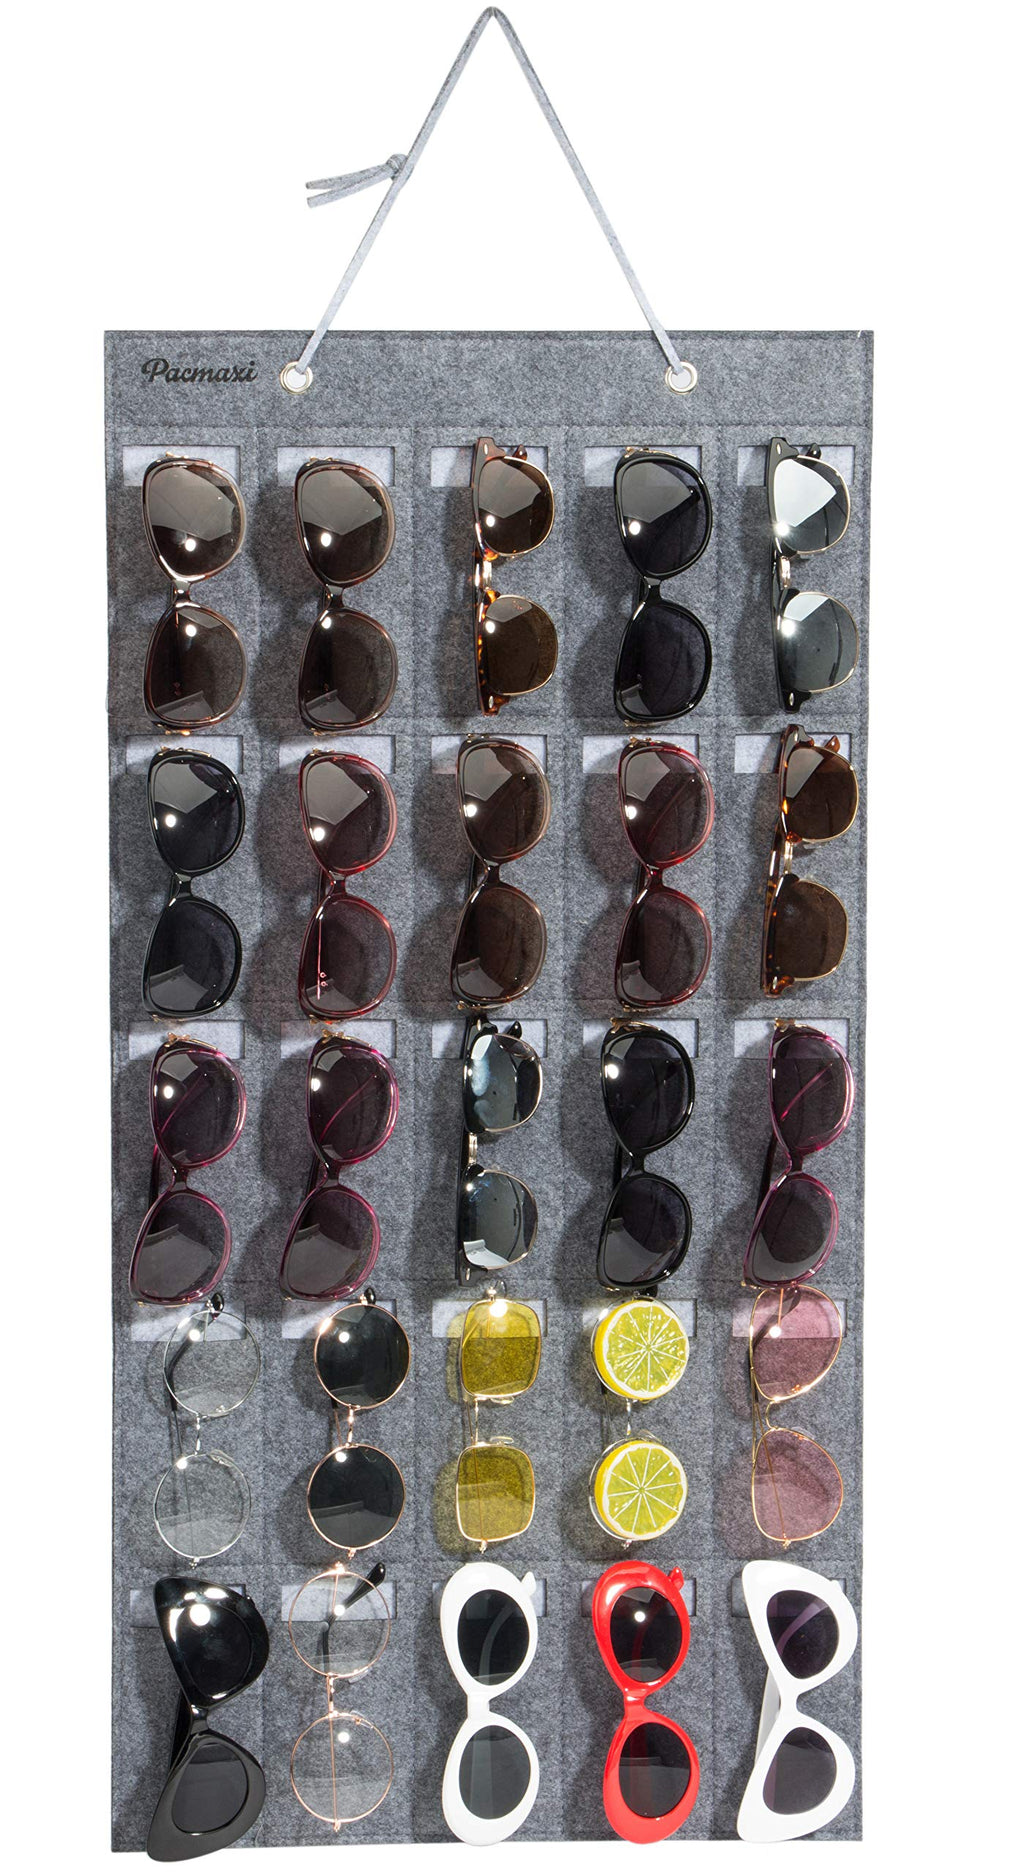 [Australia] - PACMAXI Sunglasses Storage Organizer, Wall Pocket Mounted by Sunglasses, Hanging Eyeglasses Storage Holder, Eyewear Display. Grey 25 Slot 